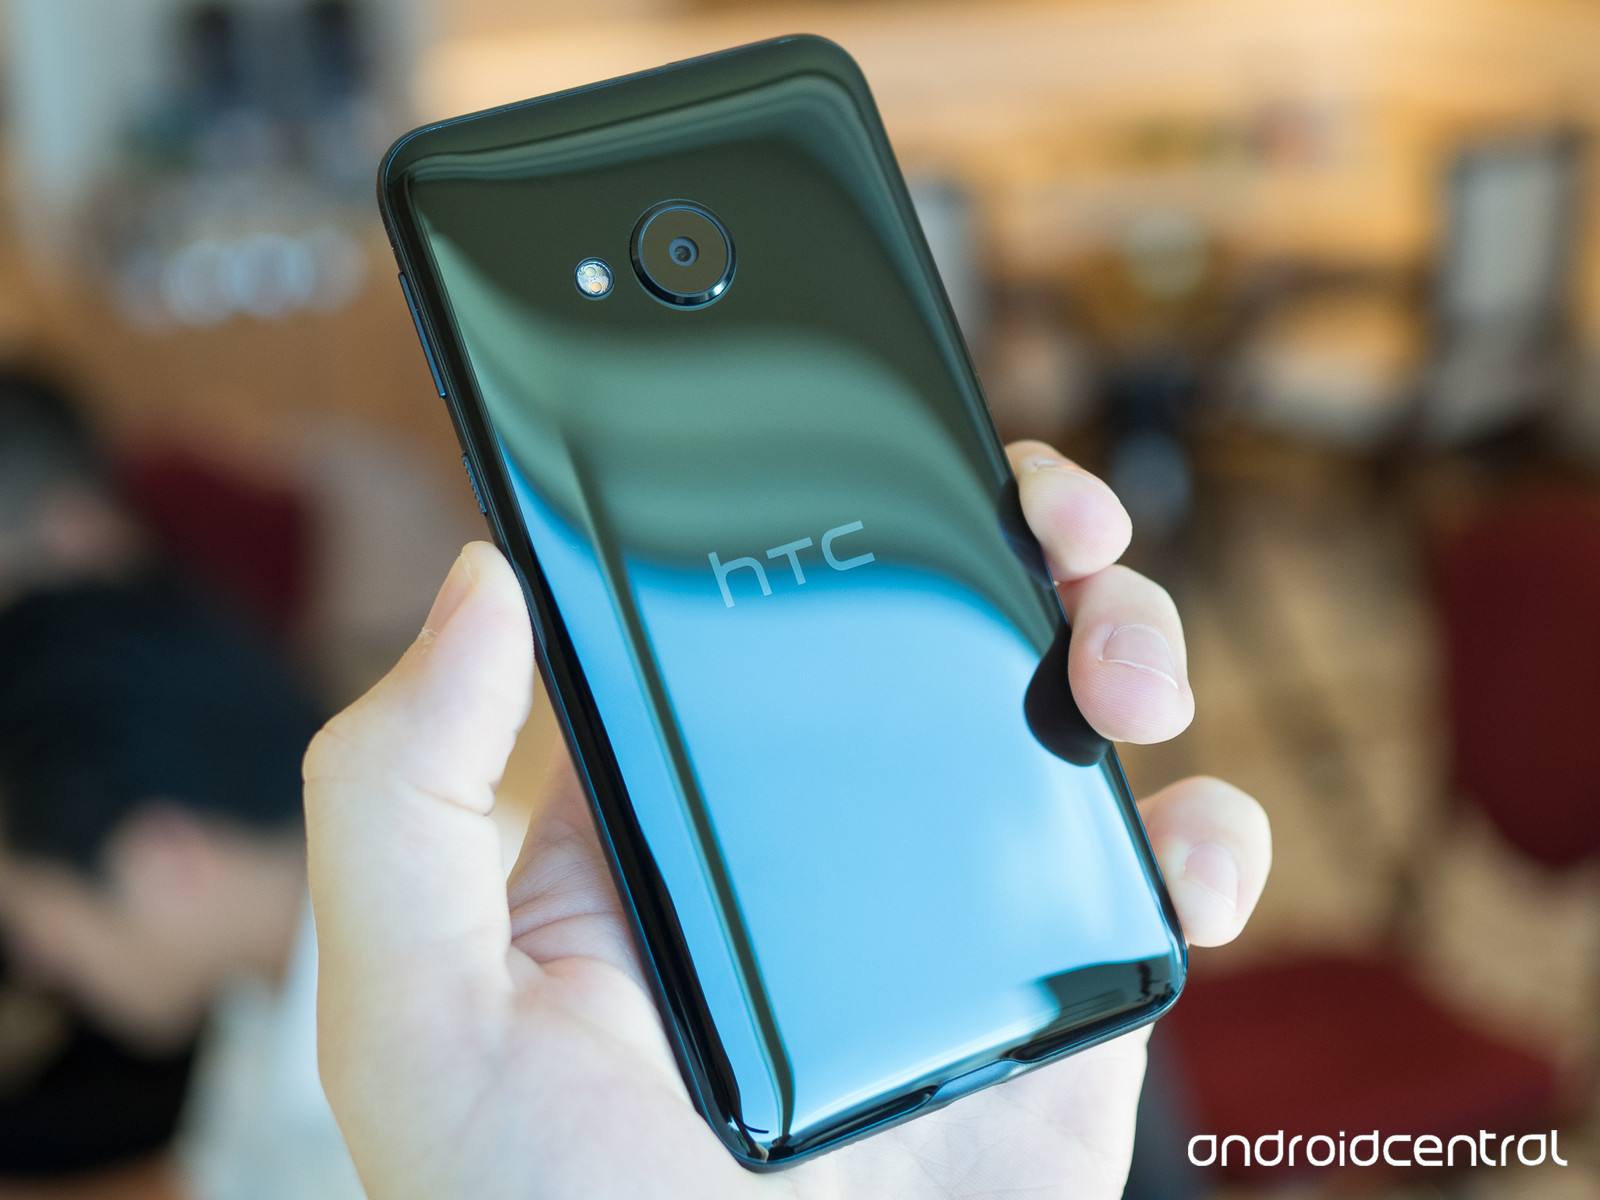 4g运行内存市场价超五千，HTC考虑到过同行的体会吗？